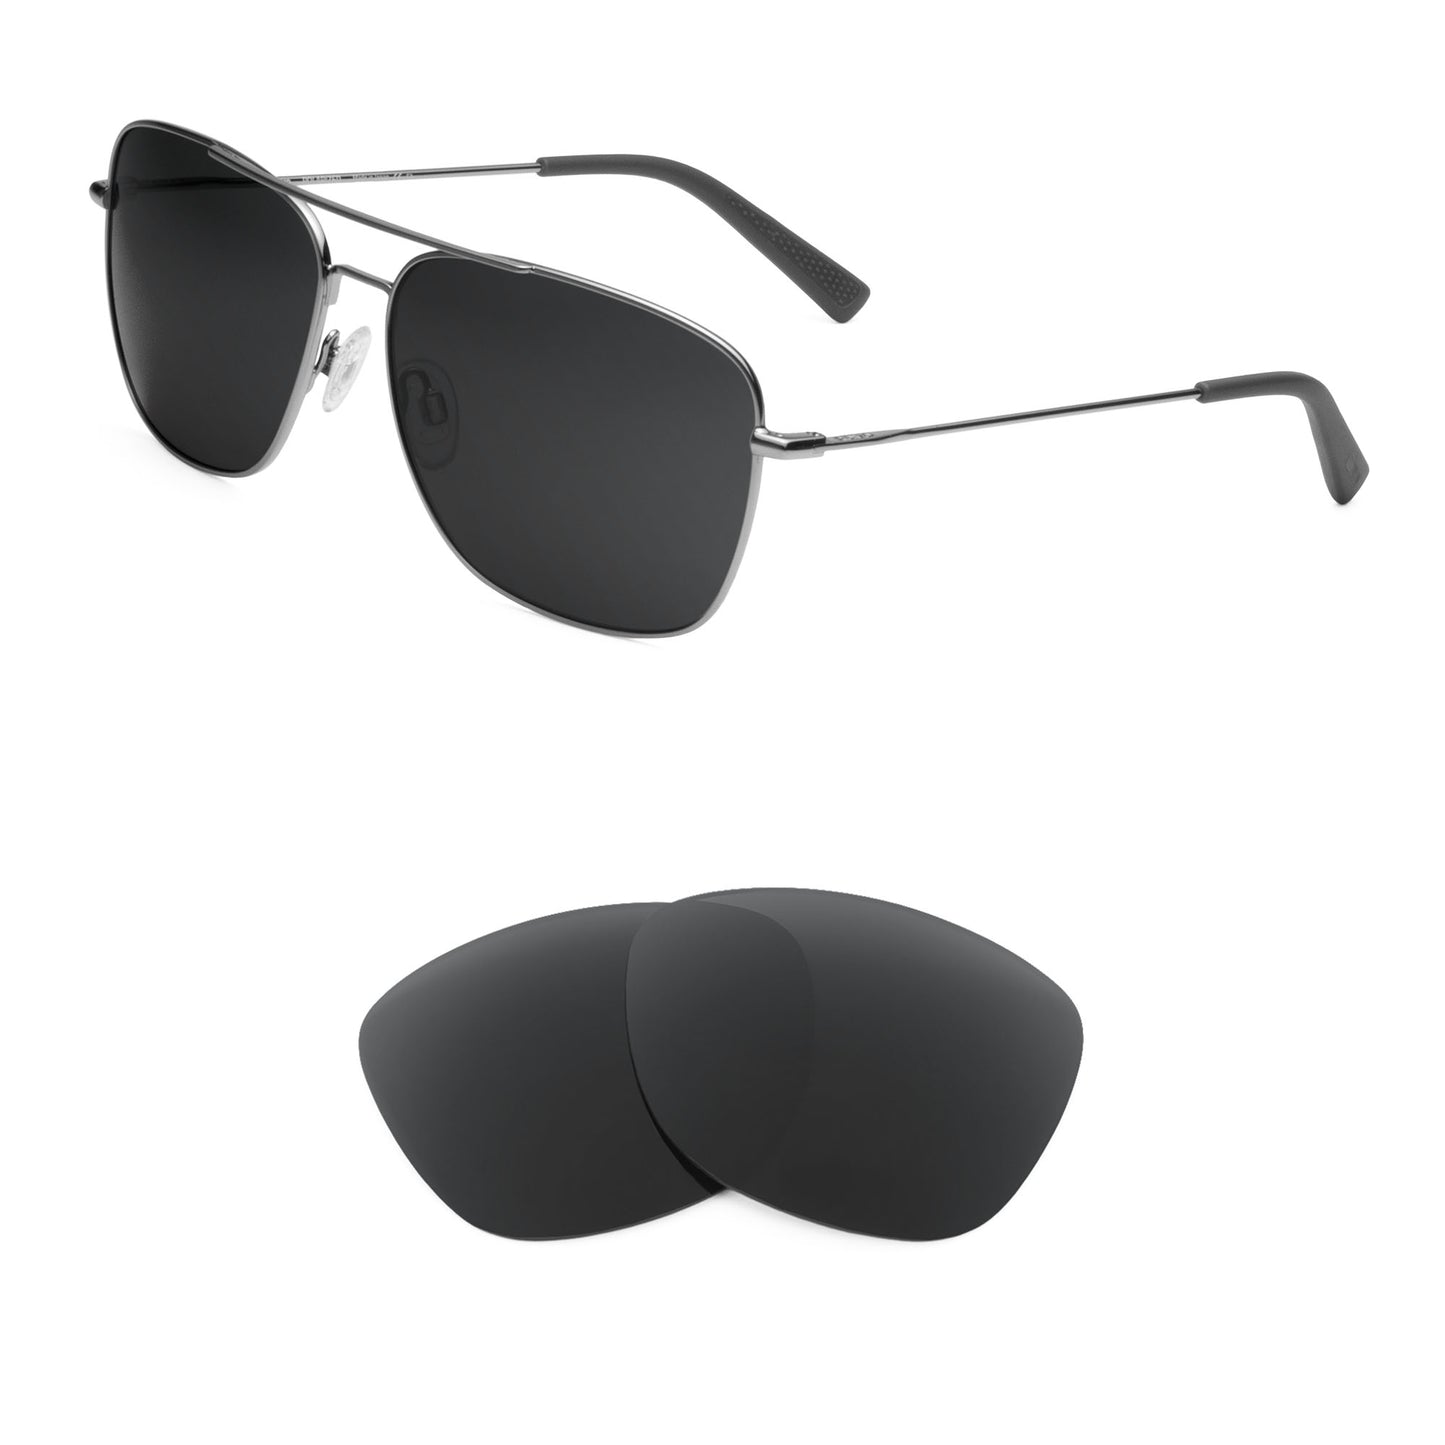 Revo Harbor sunglasses with replacement lenses